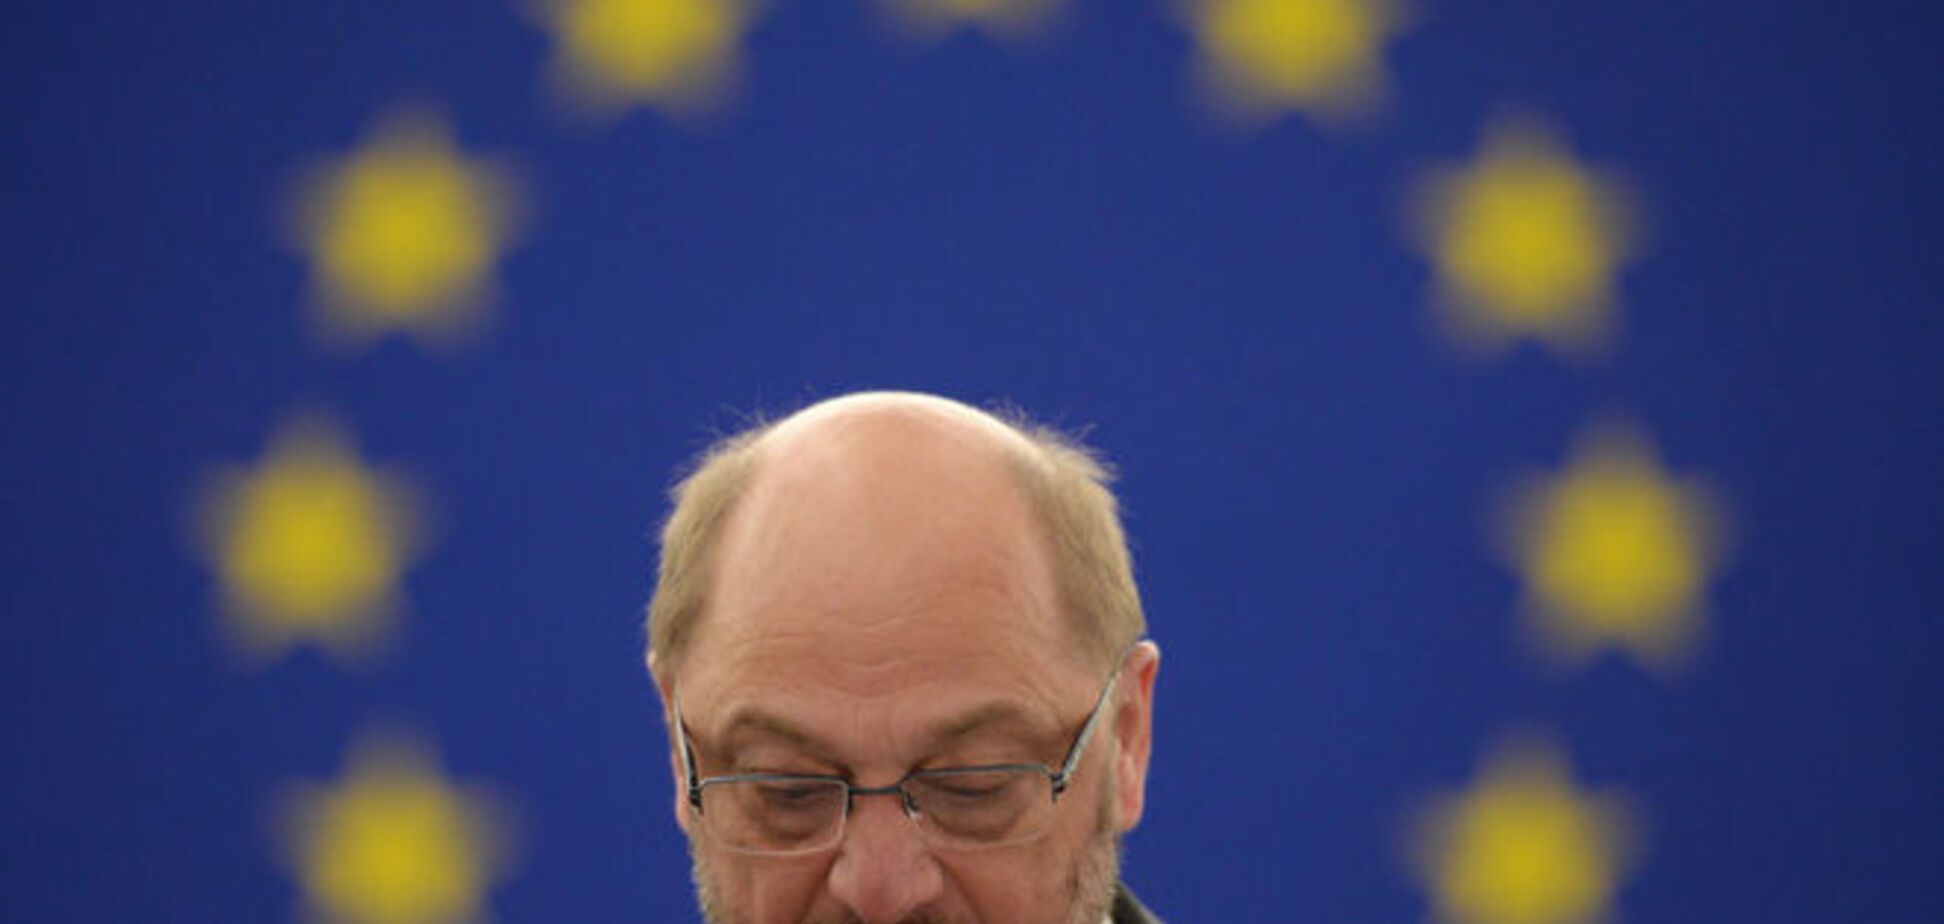 Еврозона может развалиться на части - глава Европарламента